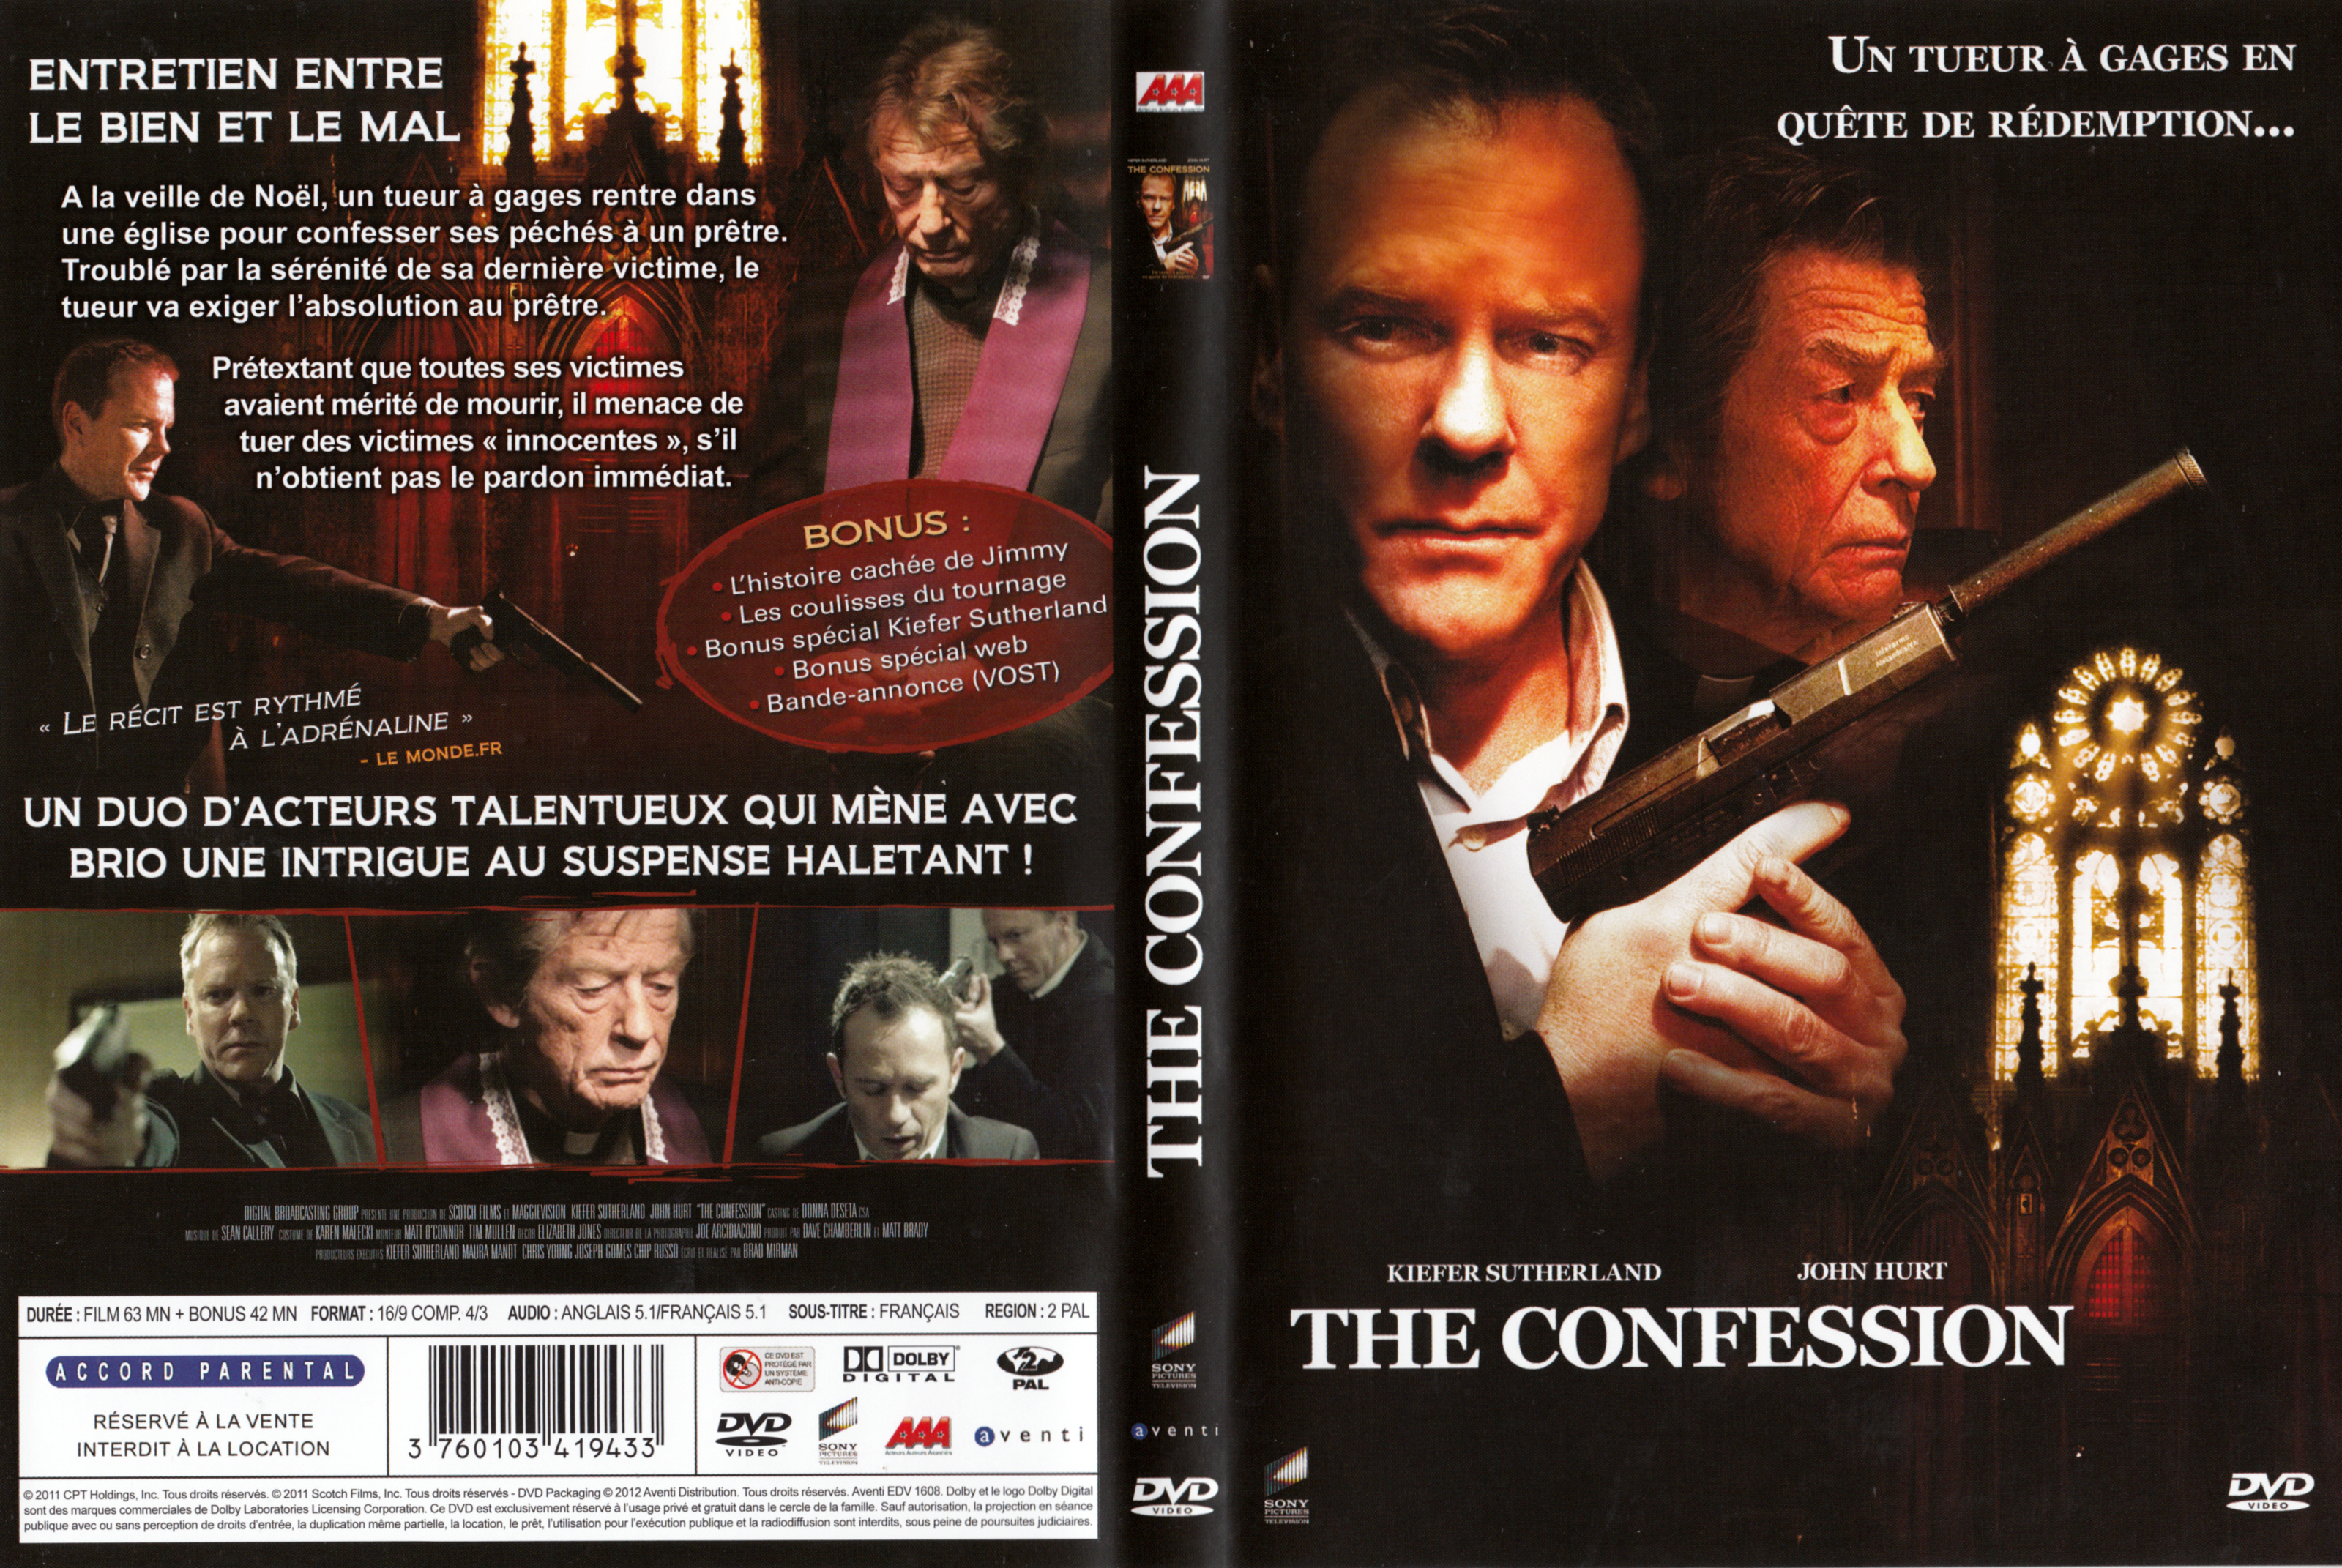 Jaquette DVD The Confession